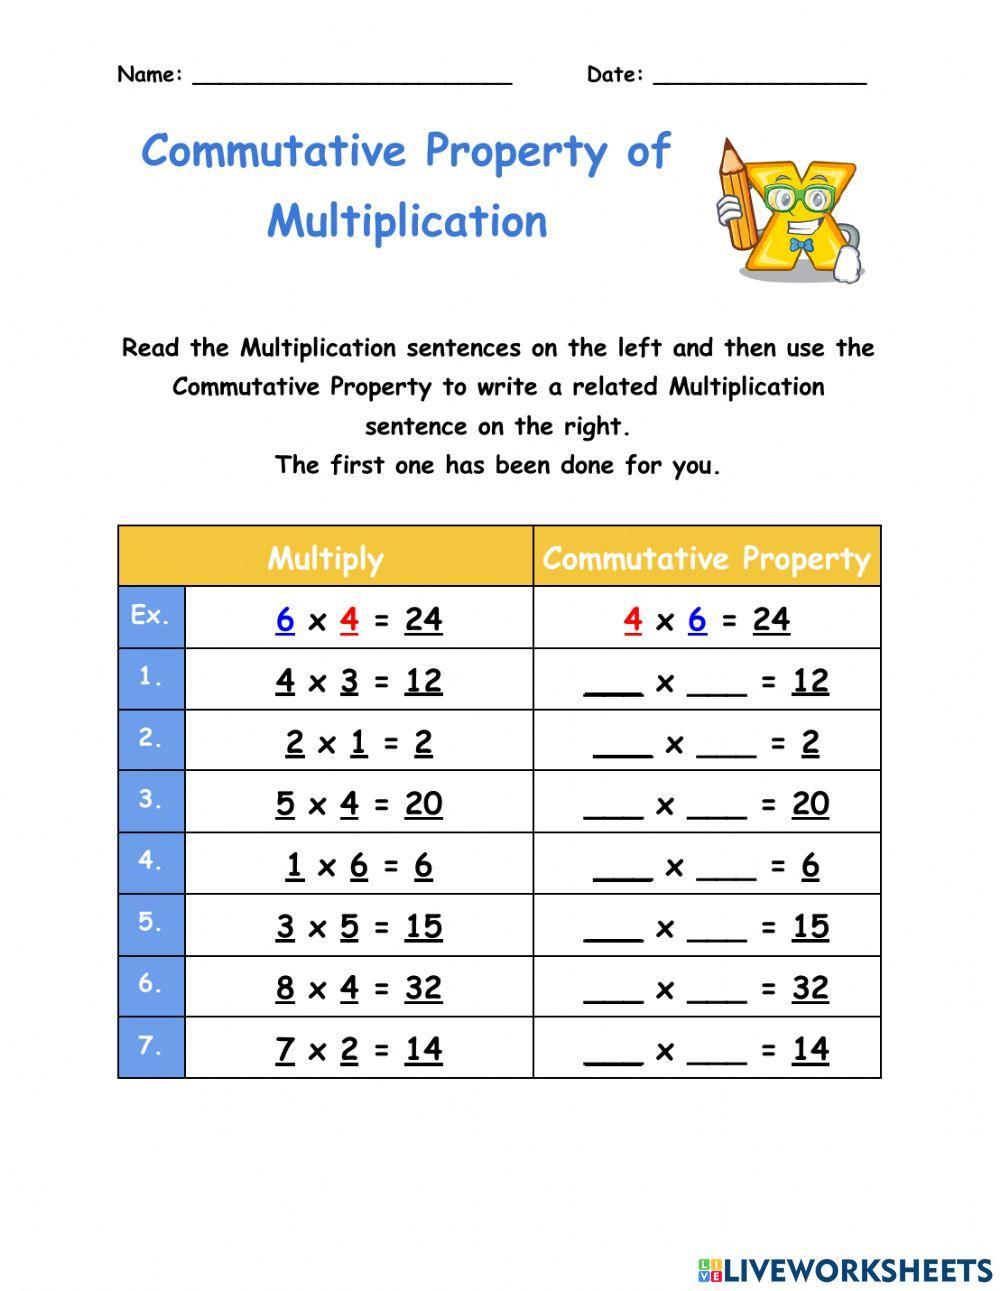 Simple Commutative Property of Multiplication